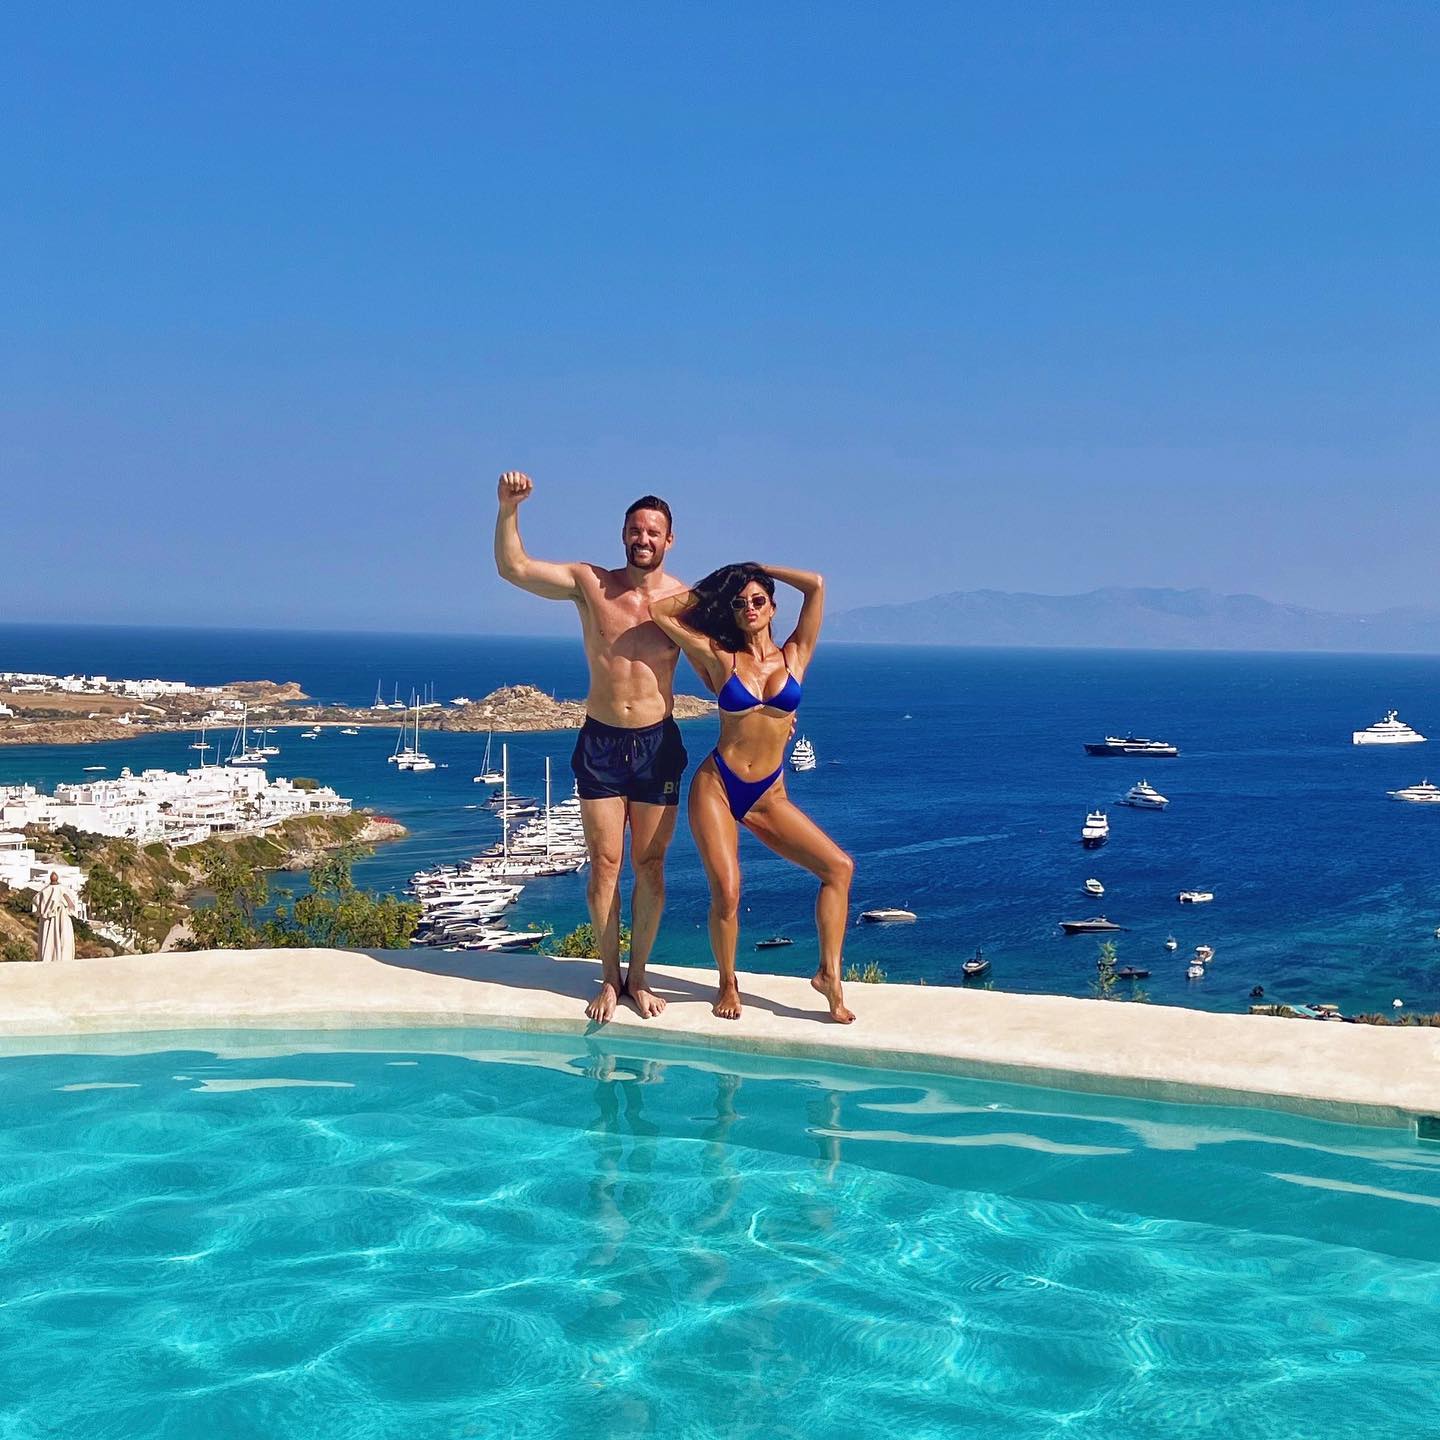 Nicole Scherzinger Celebrates The Fourth in Greece! - Photo 7